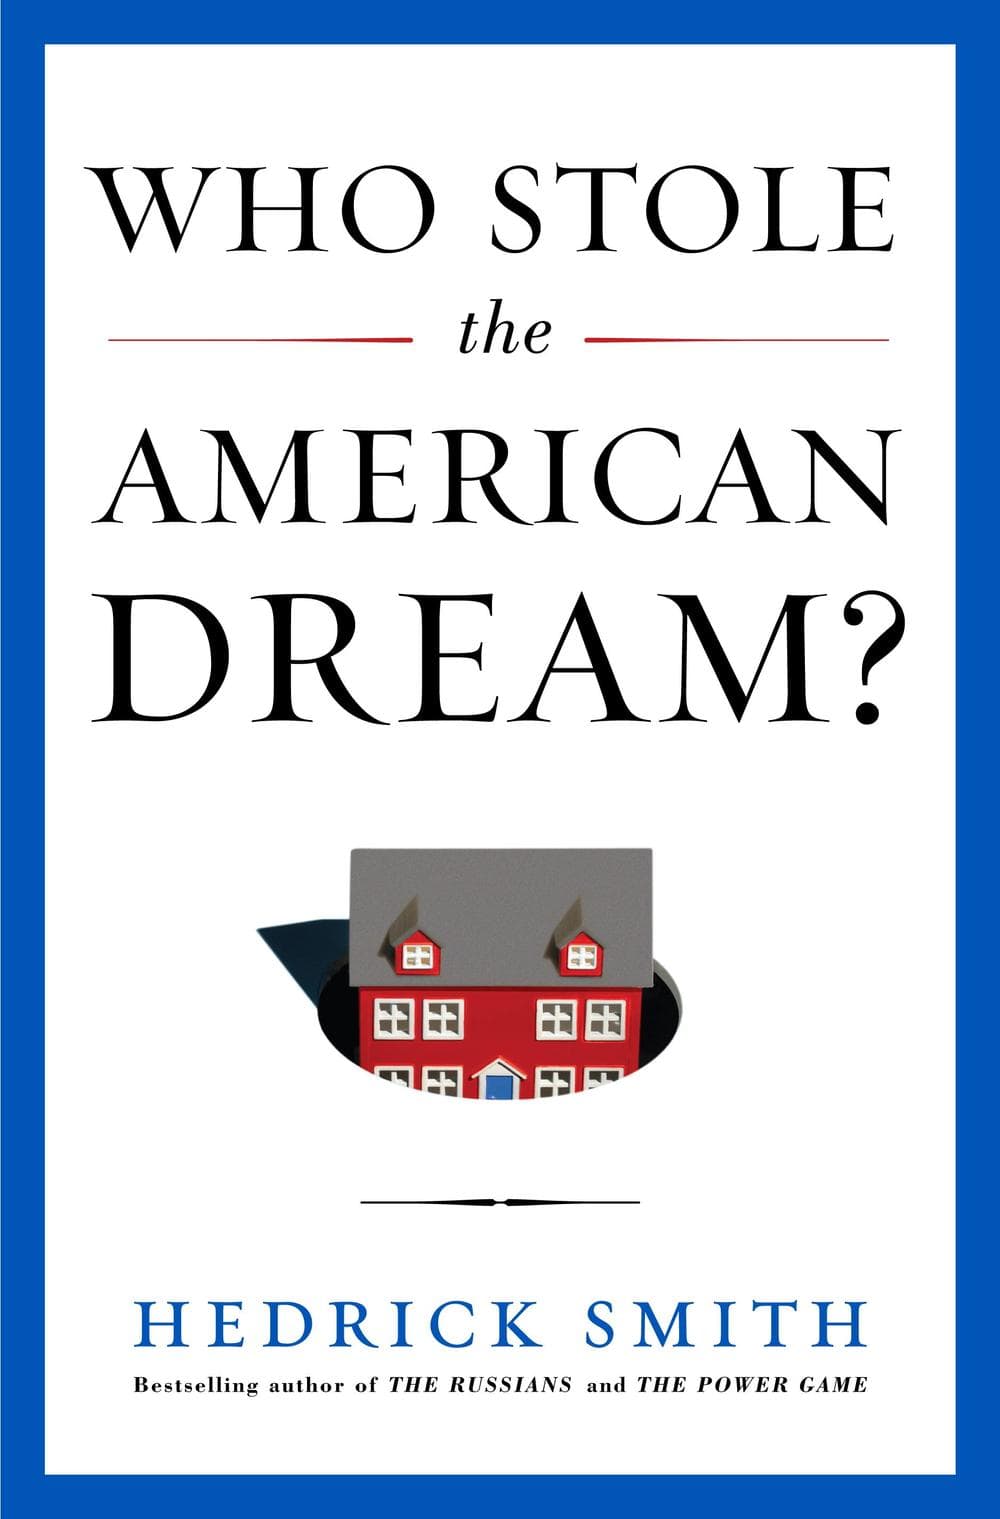 "Who Stole the American Dream?"